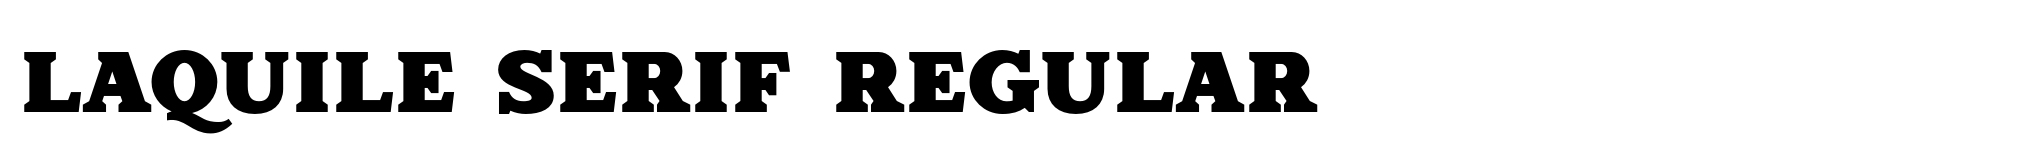 Laquile Serif Regular image